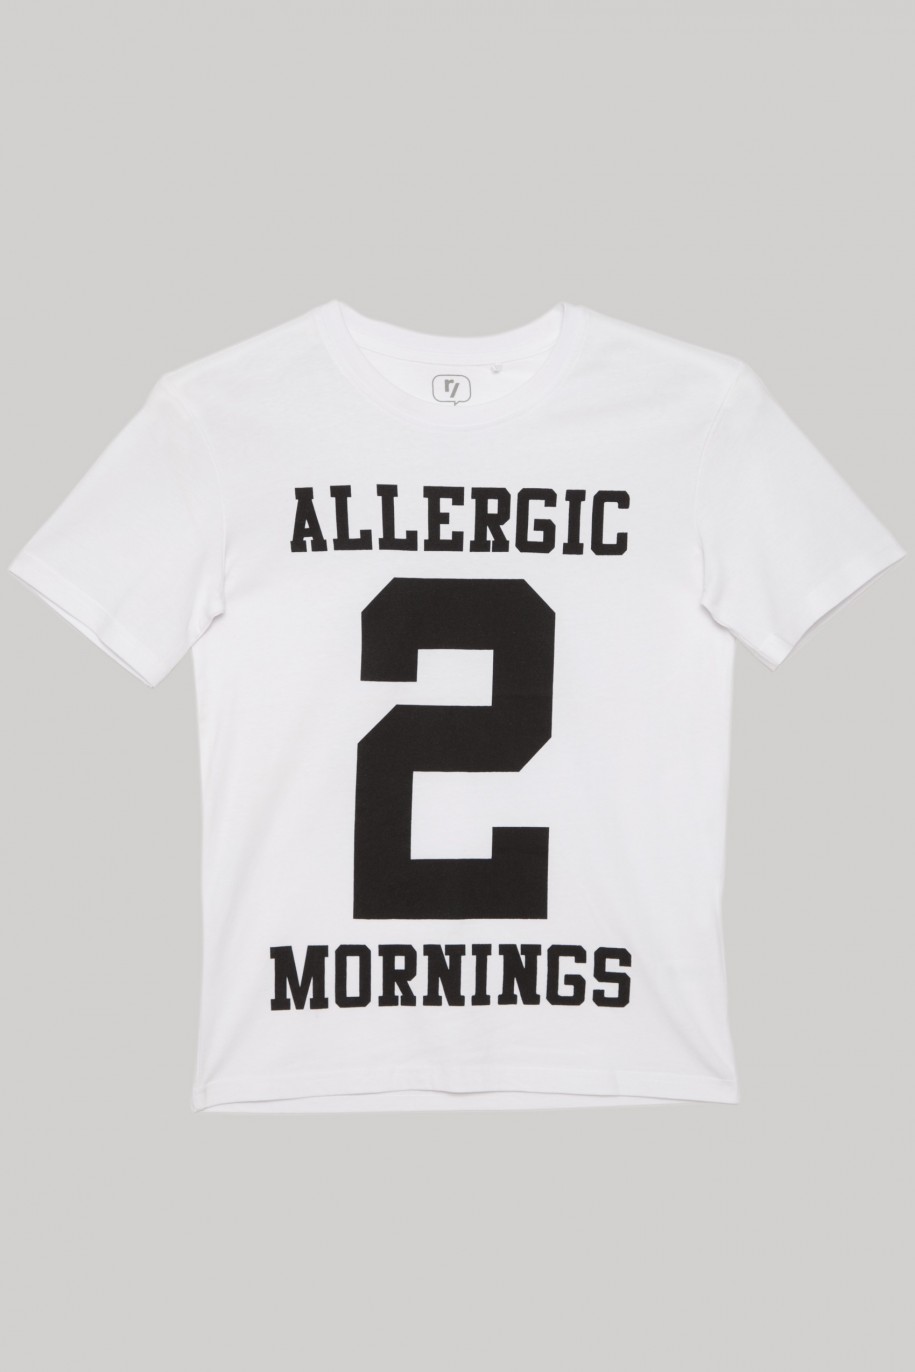 Biały t-shirt dla chłopaka ALLERGIC 2 MORNINGS - 27832